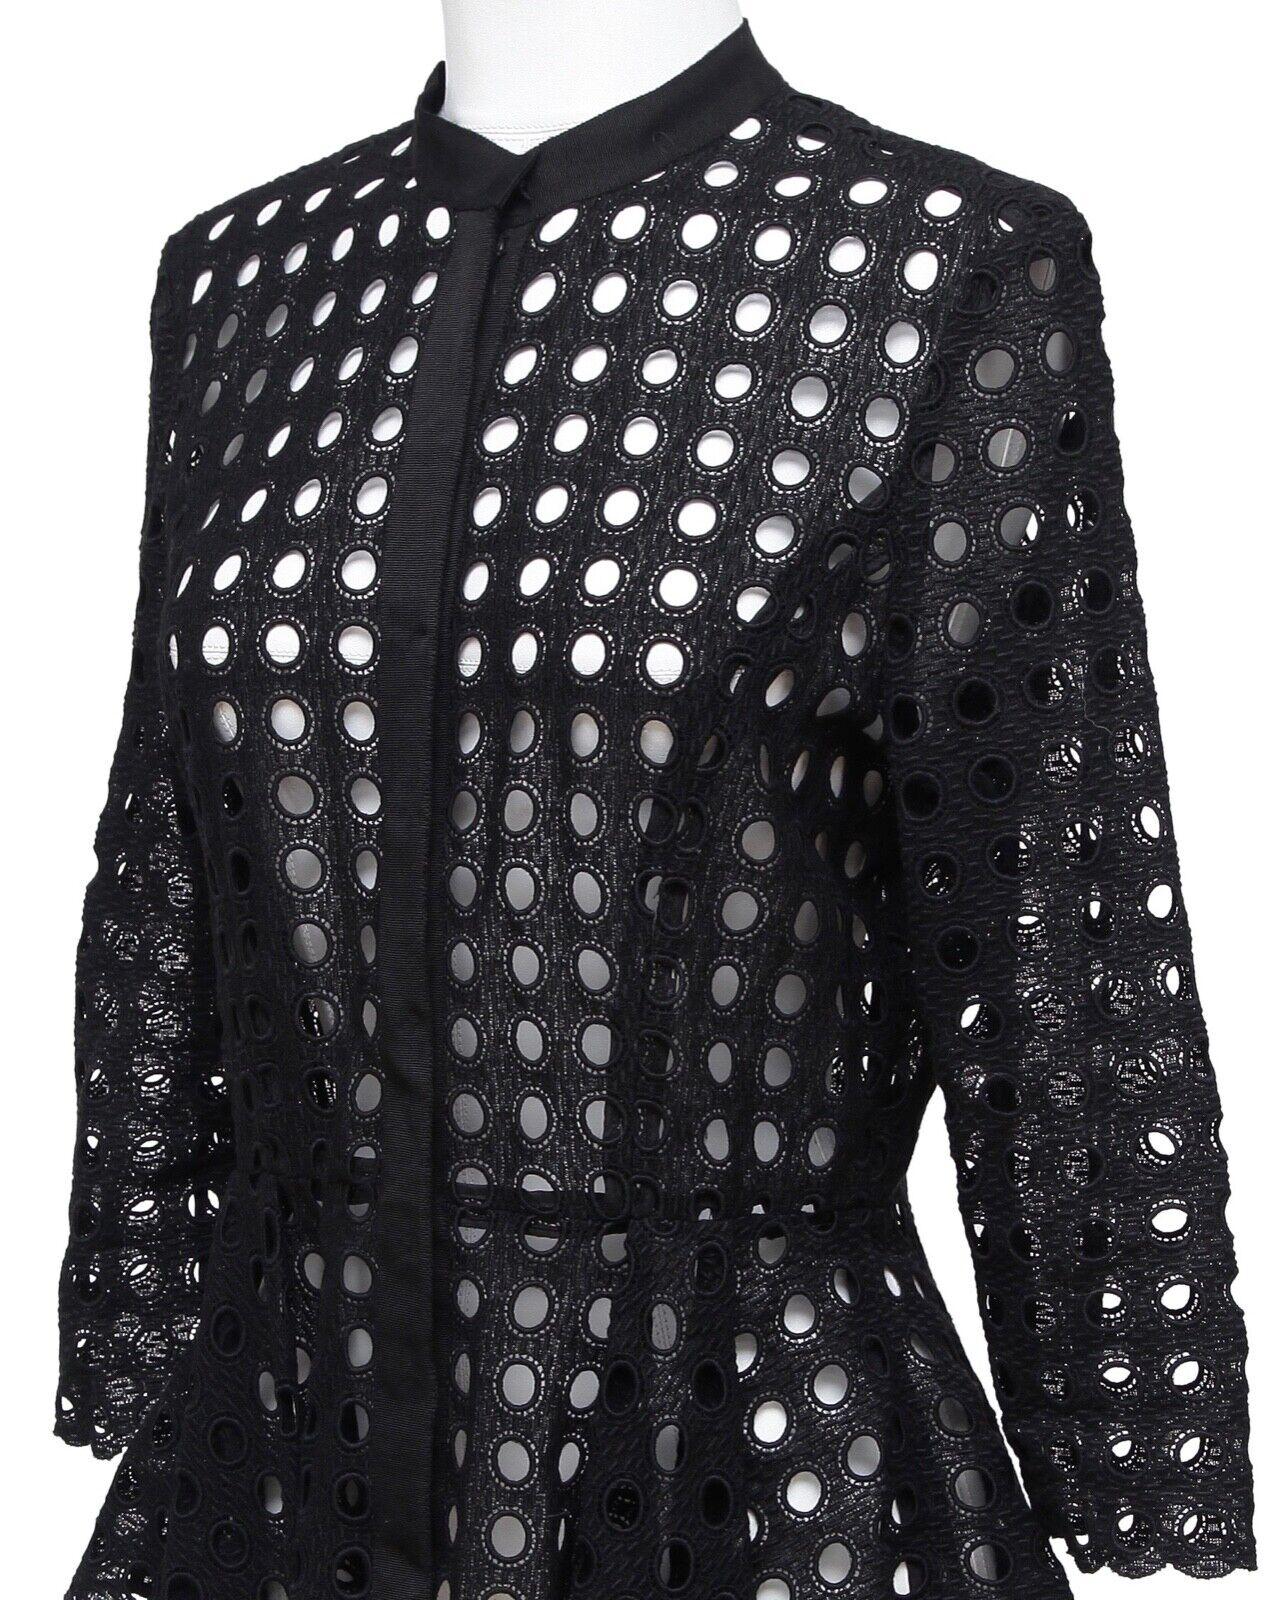 Women's OSCAR DE LA RENTA Black Cardigan Jacket Eyelet Lace 3/4 Sleeve Sz 4 For Sale